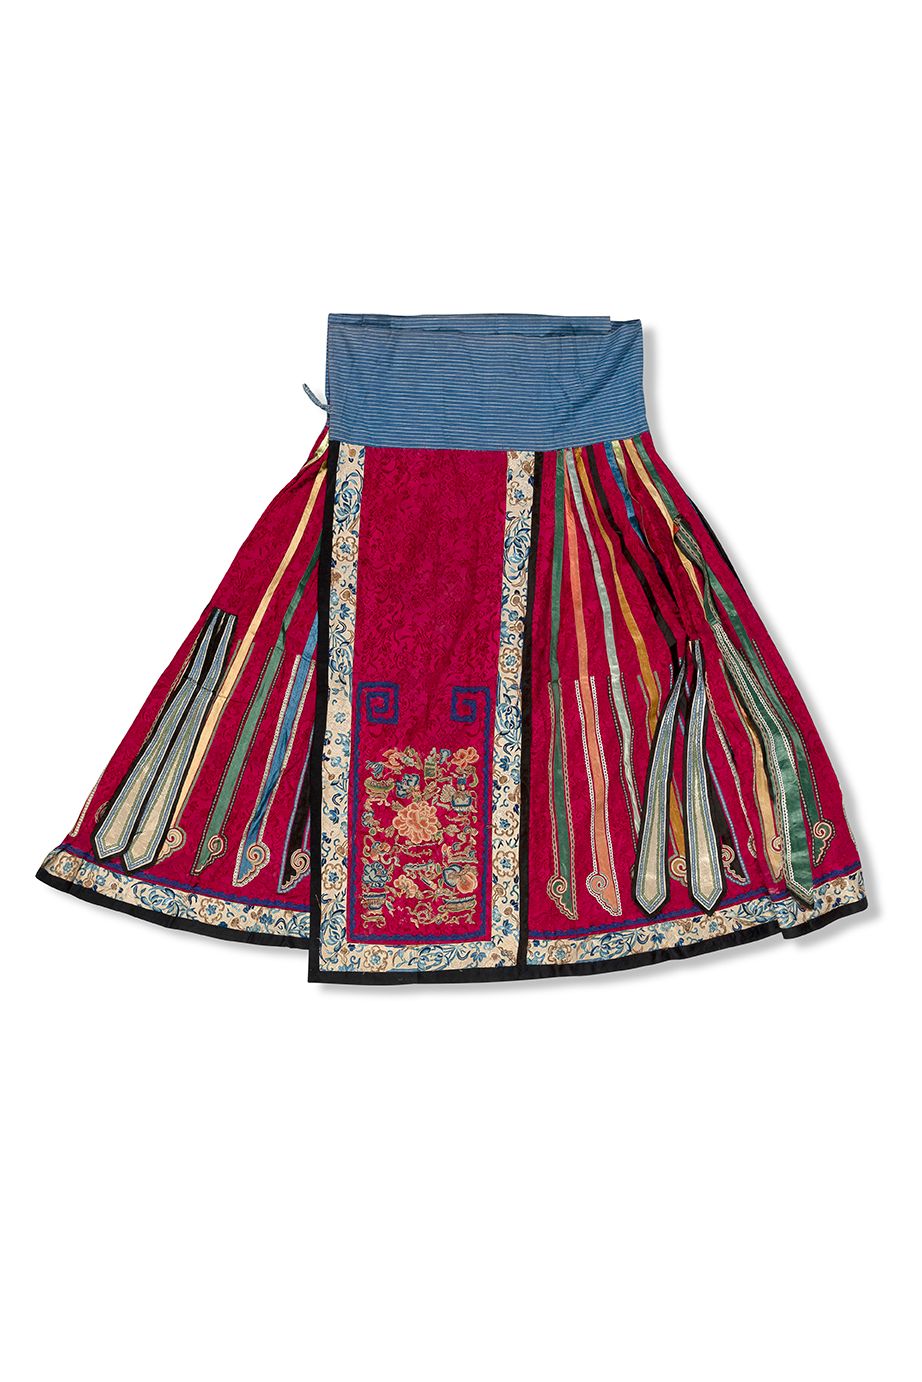 CHINE DYNASTIE QING, XIXe SIÈCLE Skirt (mang qun)
Burgundy silk damask decorated&hellip;